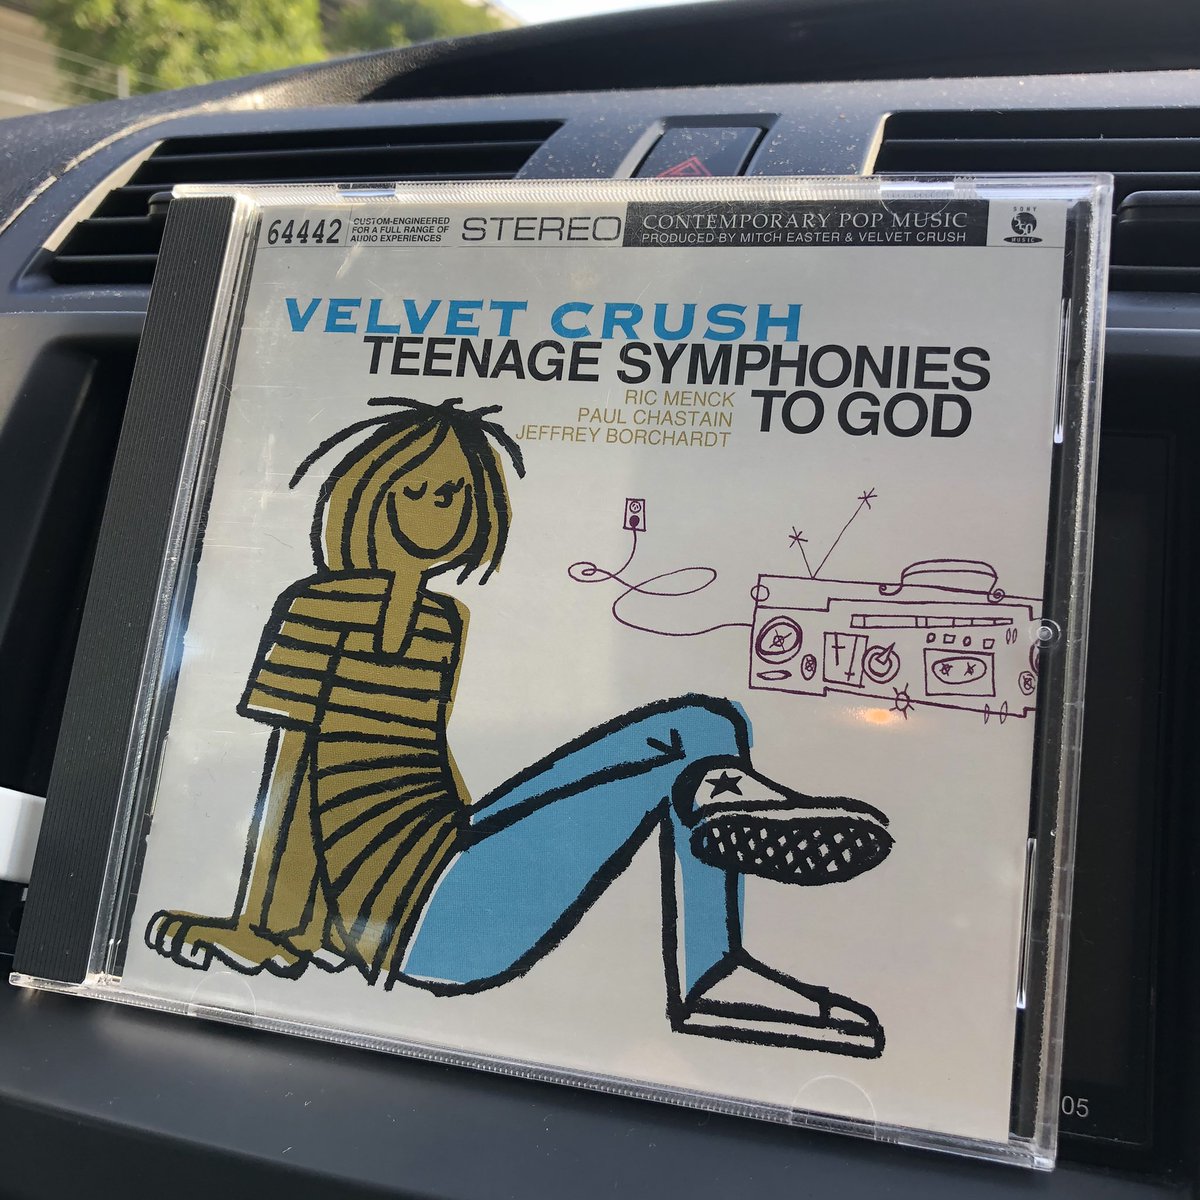 Listening to Velvet Crush on the way to work